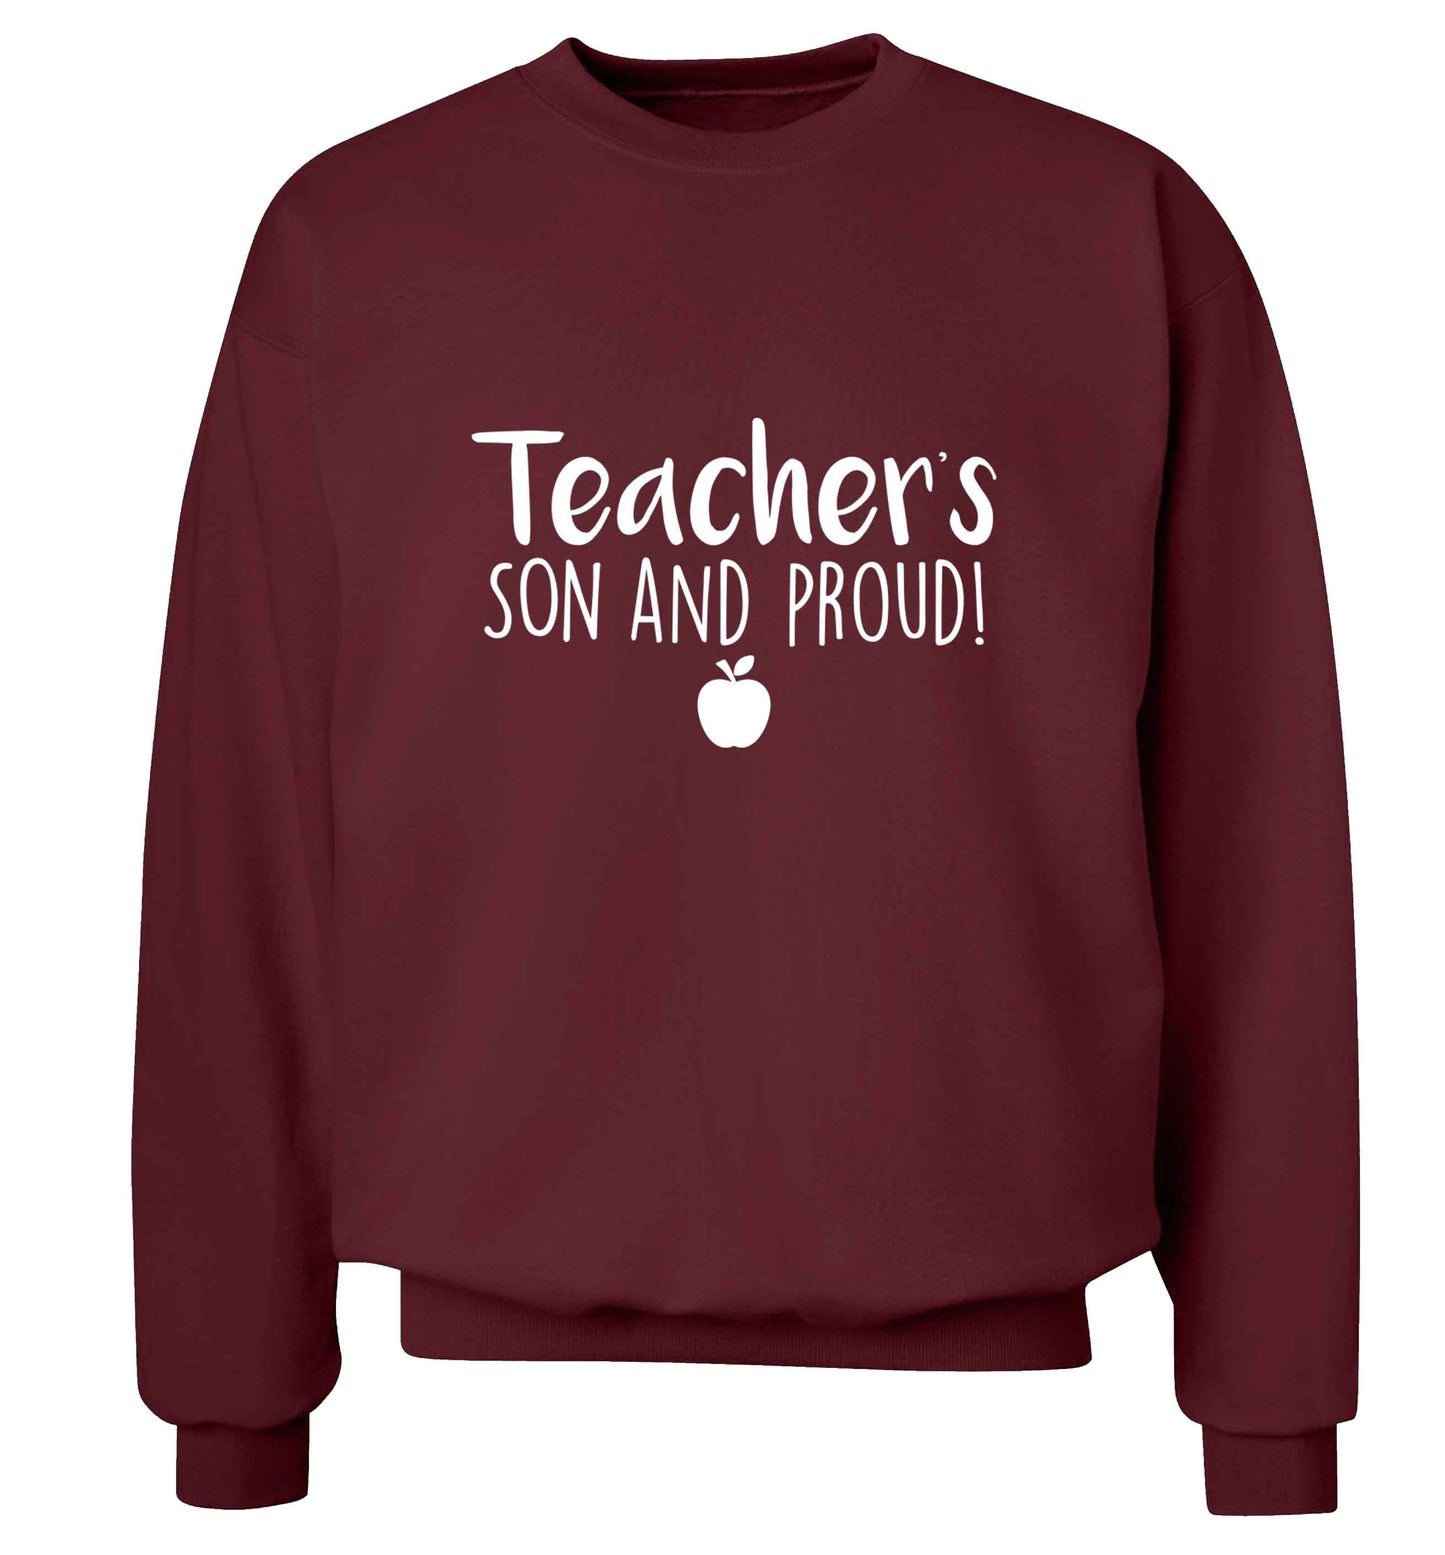 Teachers son and proud adult's unisex maroon sweater 2XL